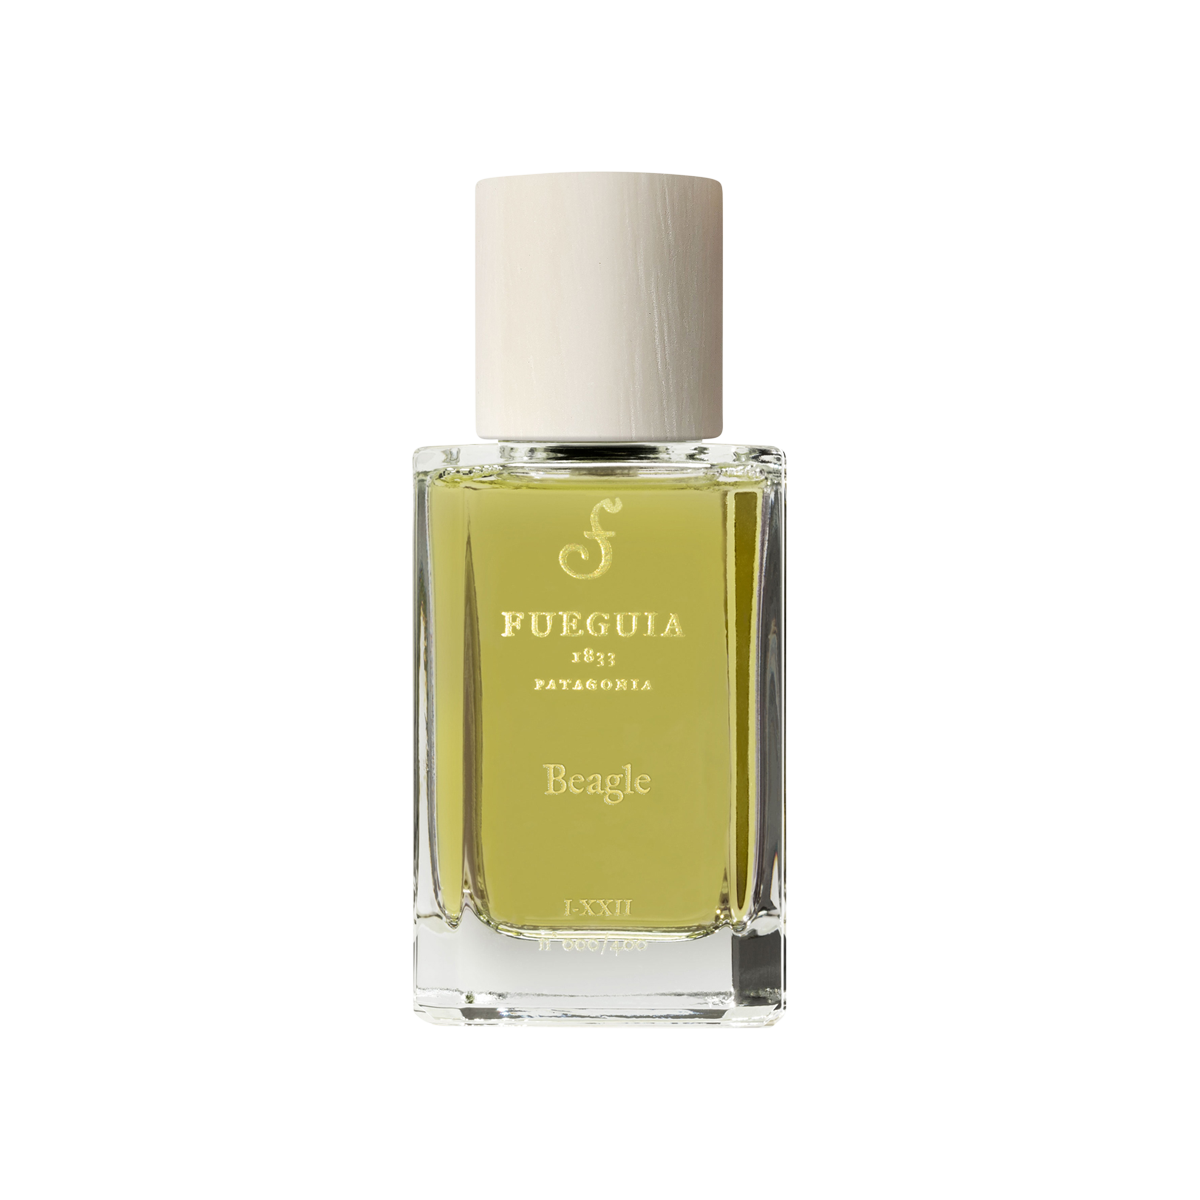 Fueguia - Beagle Eau de Parfum